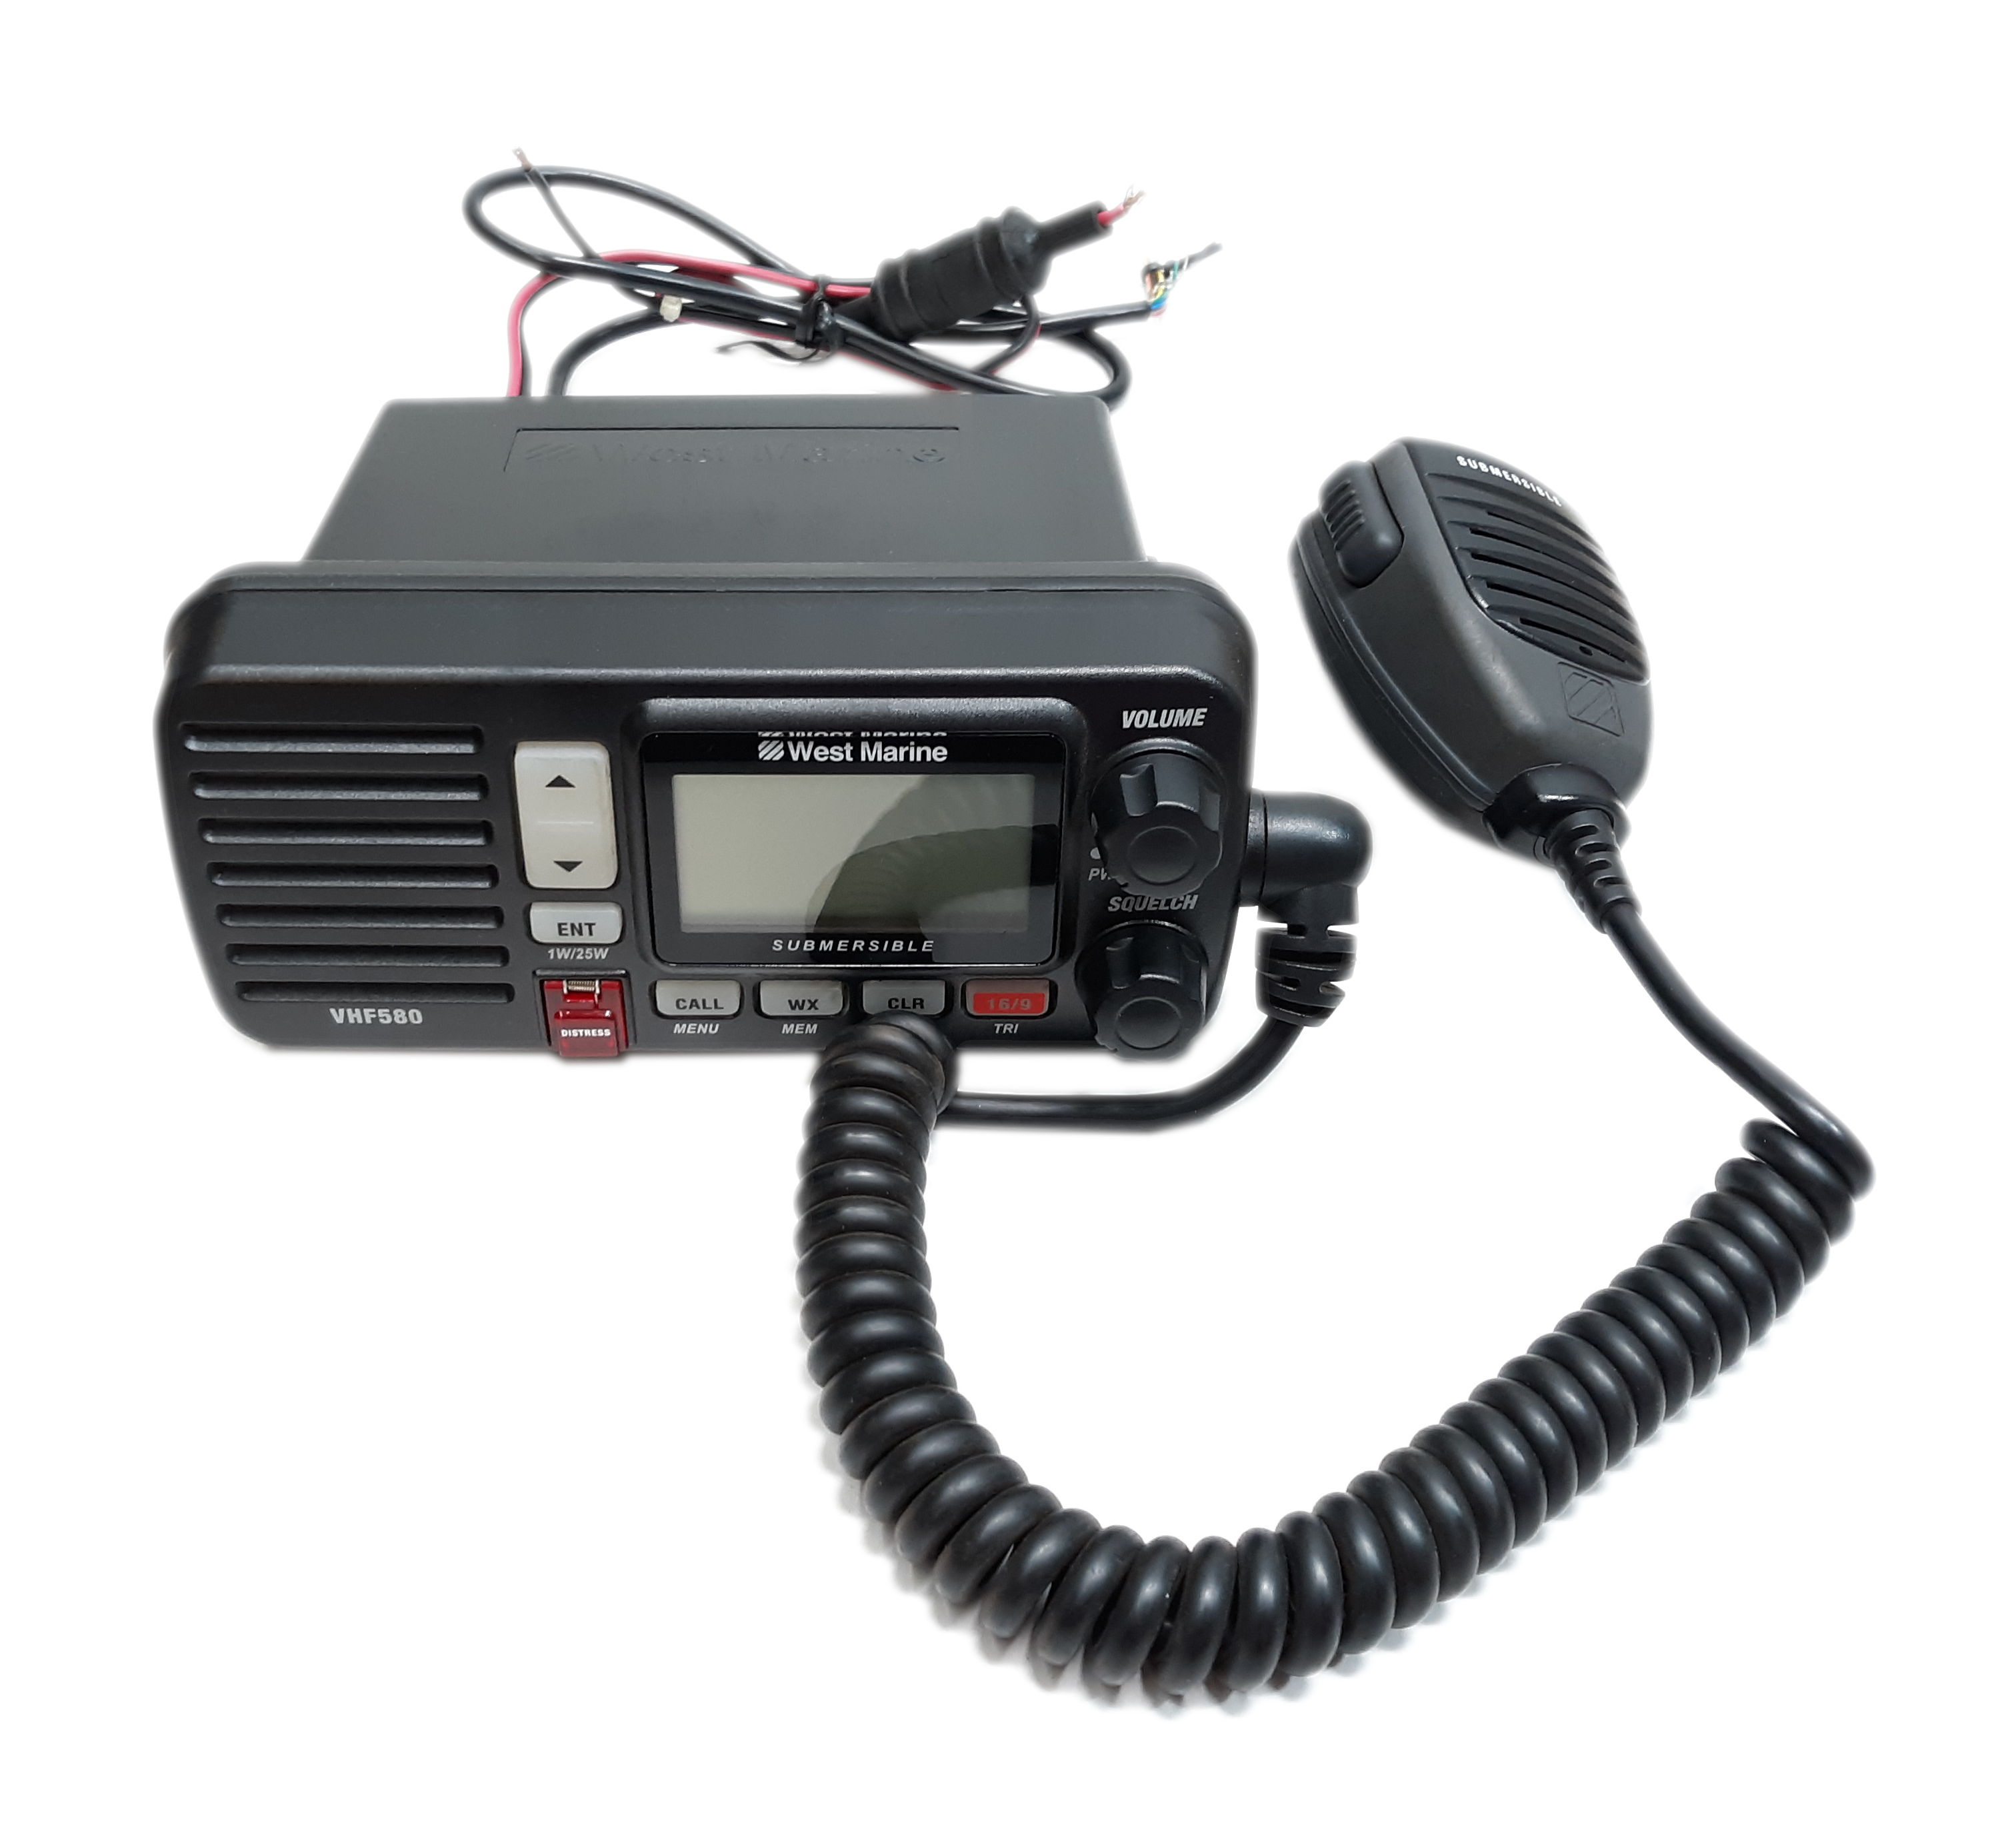 West Marine VHF580 Fixed Mount VHF Radio VHF580N-BLK Black #13790845 - Click Image to Close